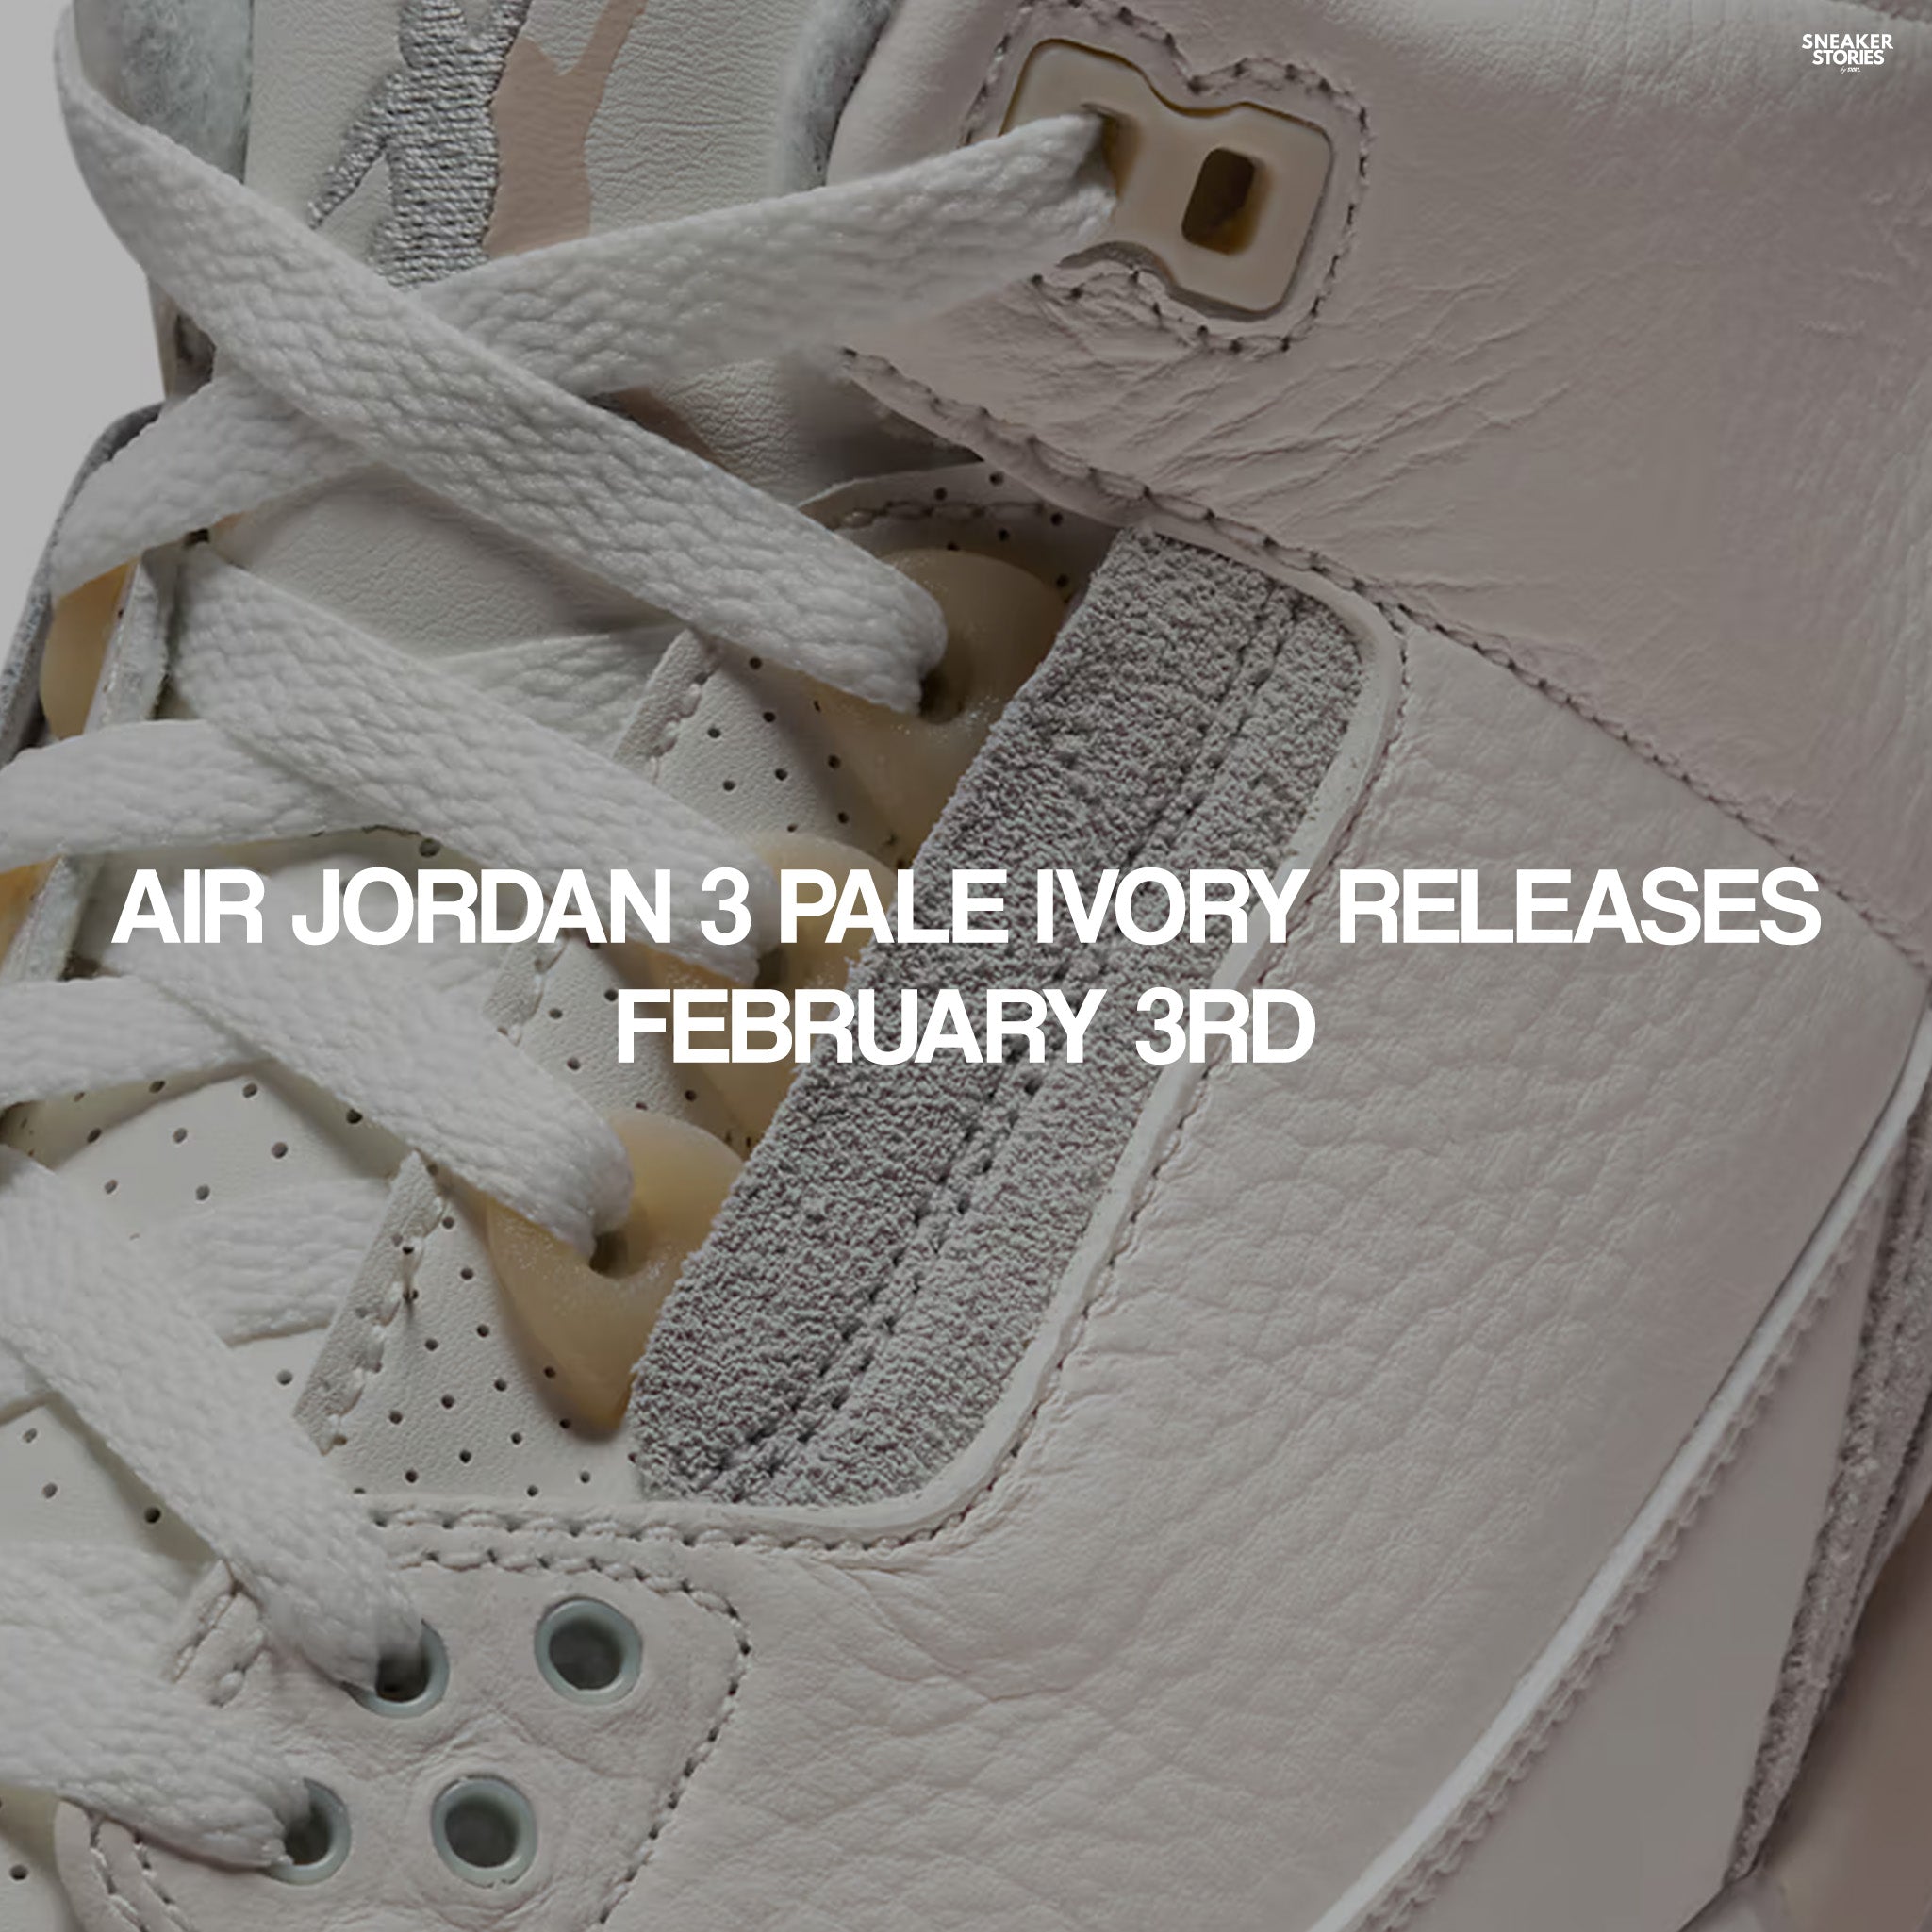 Air Jordan 3 Pale Ivory Releases February 3rd